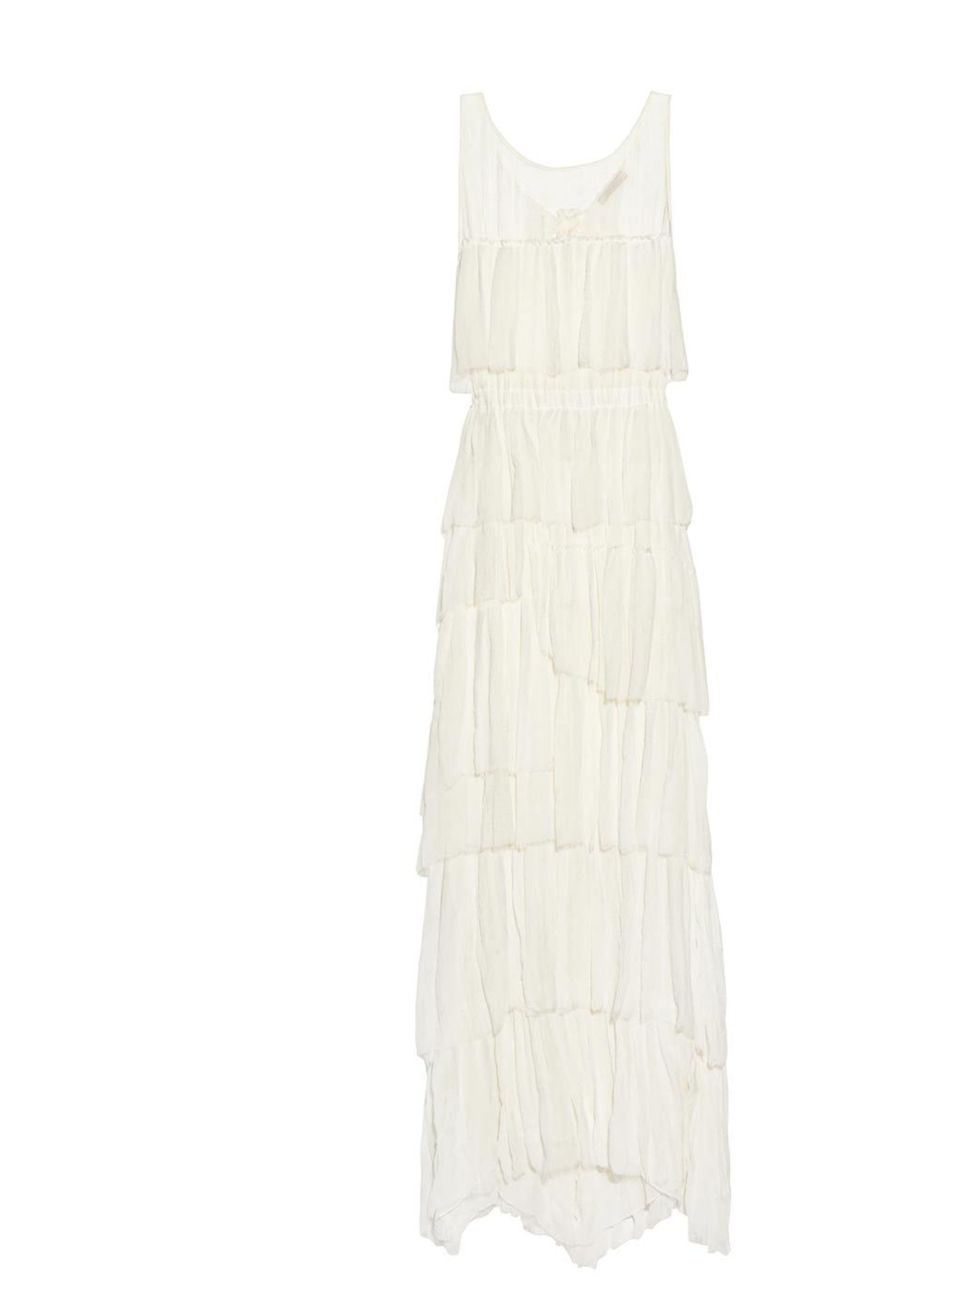 <p>Nina Ricci silk-chiffon gown, was £2,419 now £1,693, at <a href="http://www.net-a-porter.com/product/336984">Net-a-Porter</a></p>